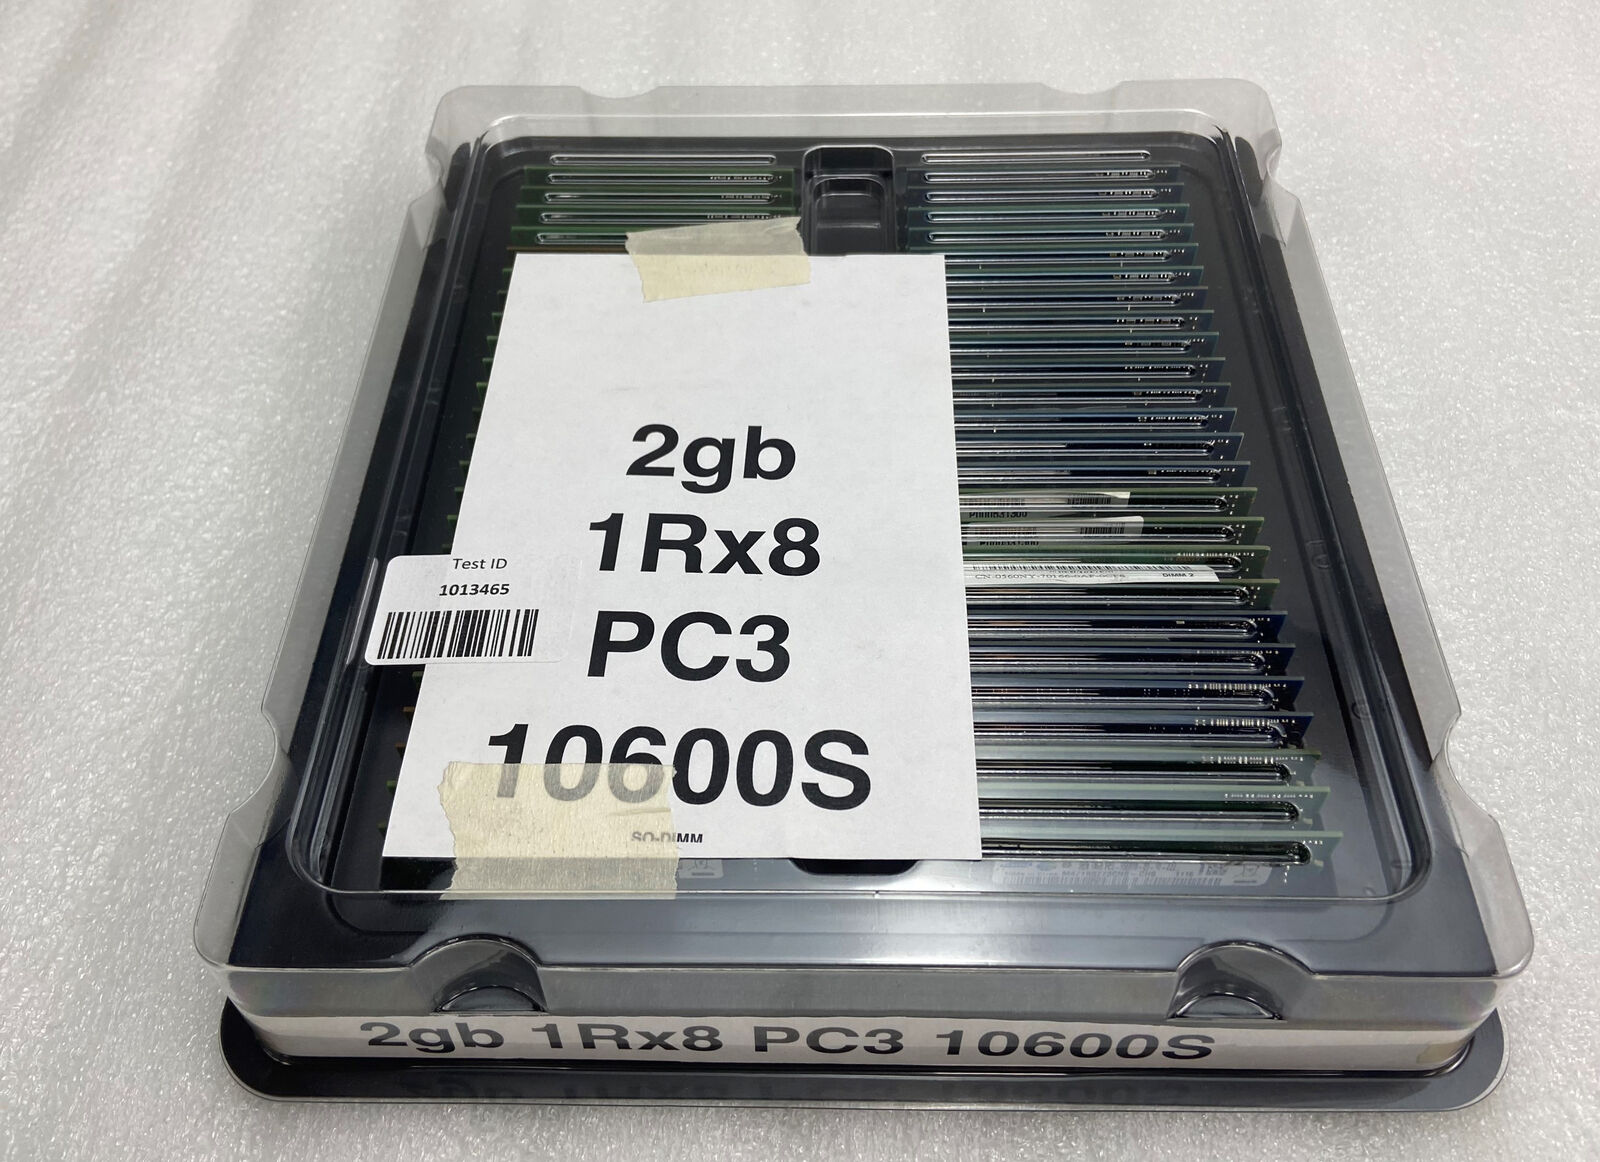 Lot of 50 RAM SO-DIMM Laptop Memory Mixed Brands 2GB 1Rx8 PC3-10600S non-ECC